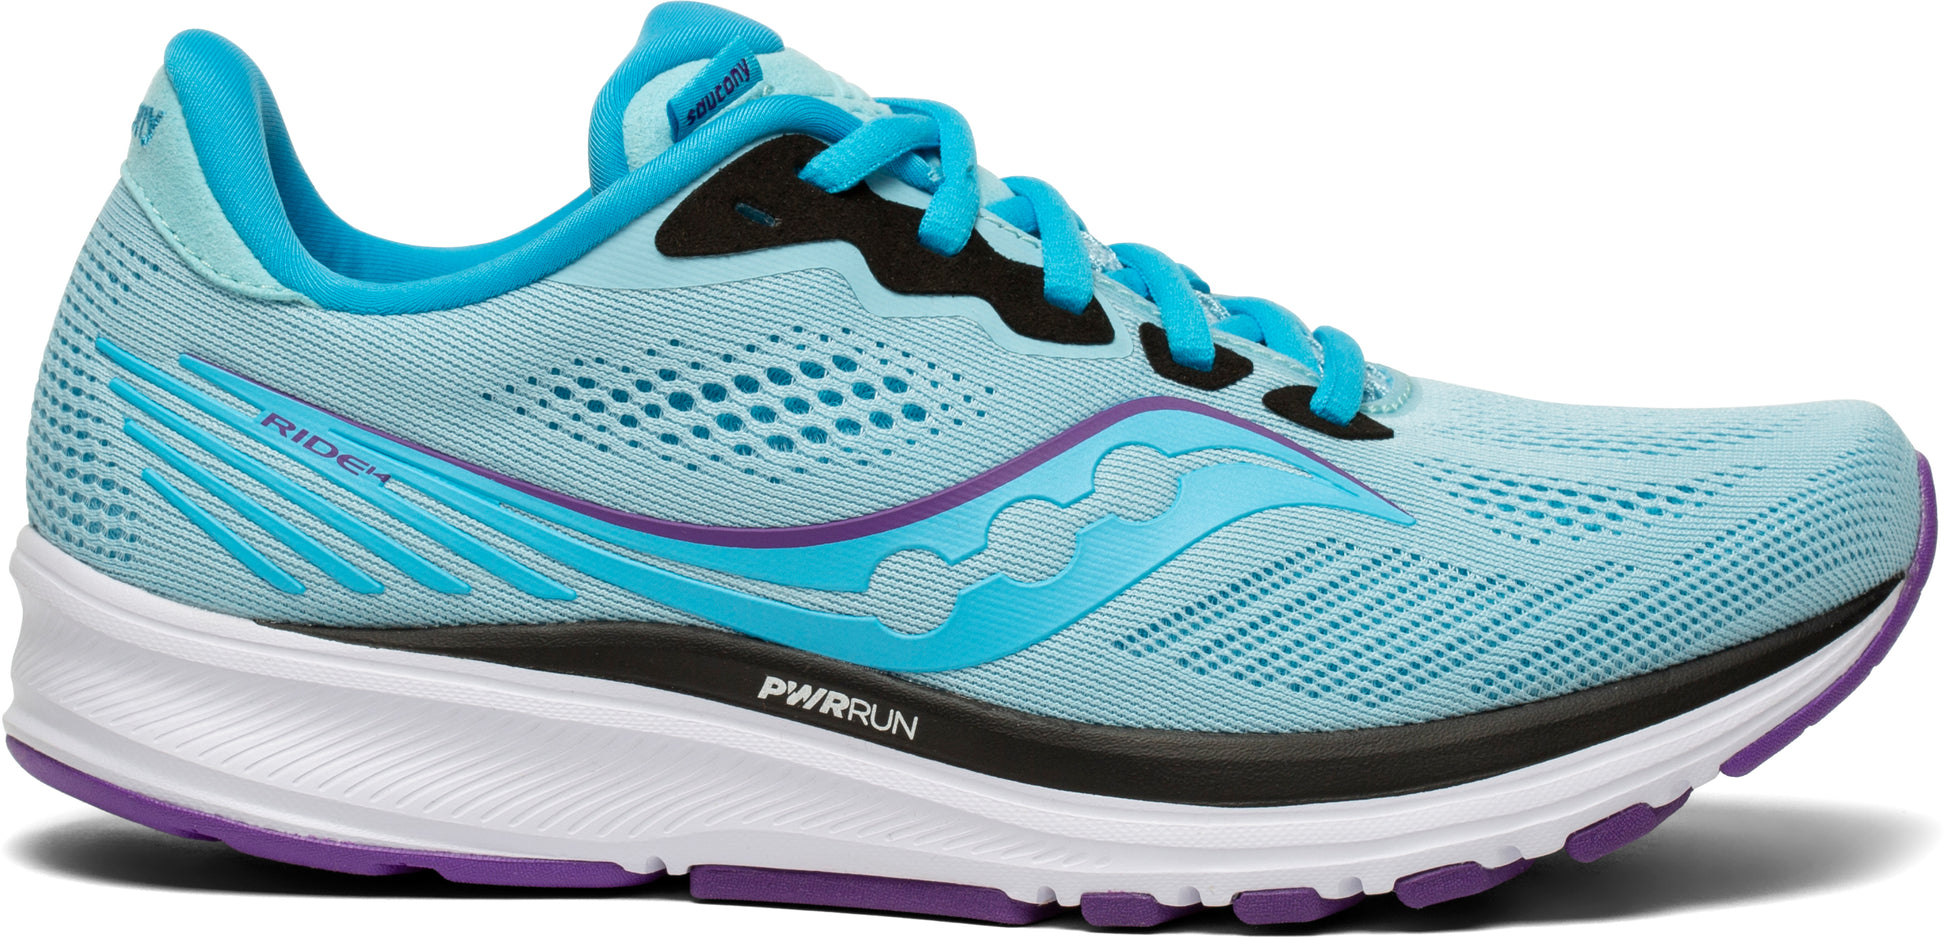 Saucony Ride 14 women's running shoe, light blue running shoes, neutral shoe, marathon, half marathon road running shoe